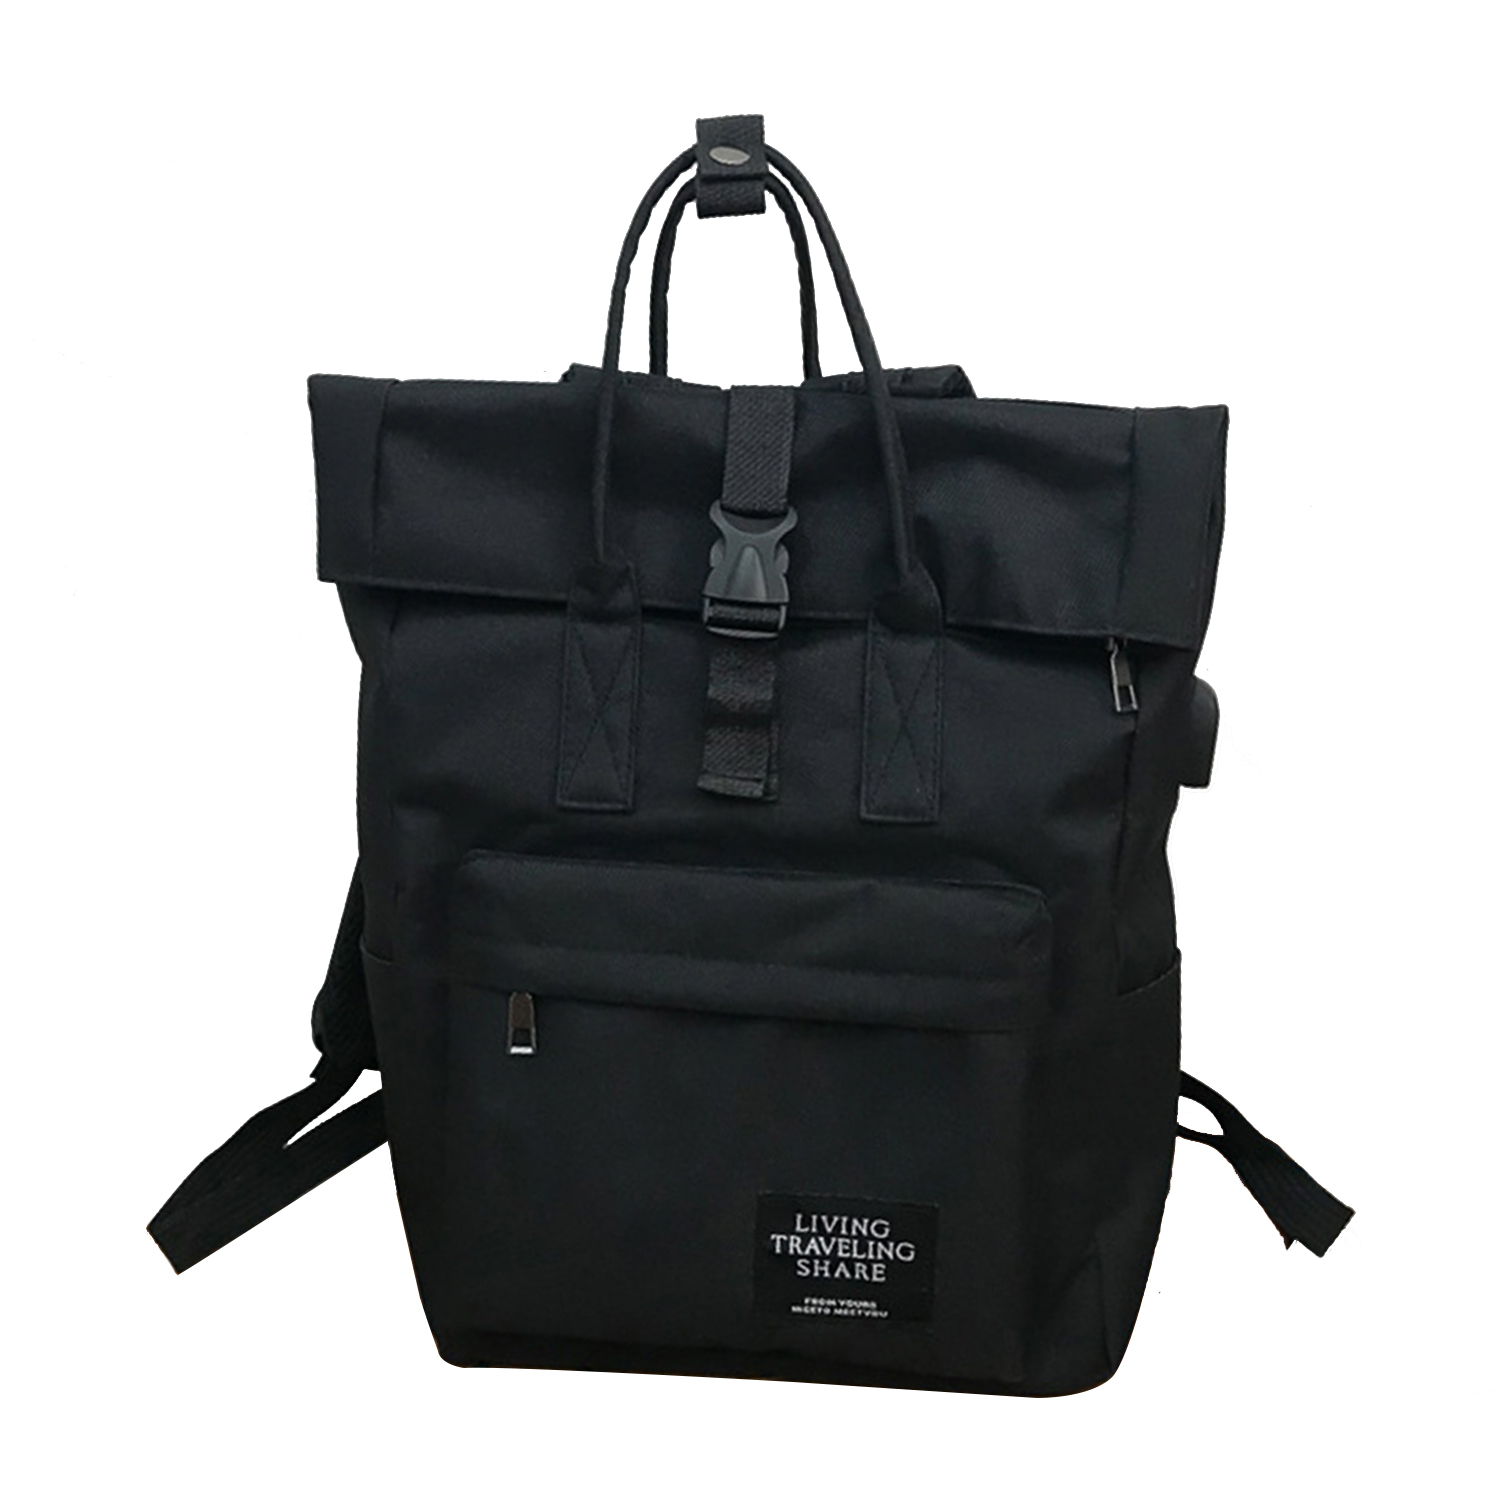 Backpack Women, Waterproof Laptop Backpack 15.6 Inch Backpack Travel Backpack for Women, Lightweight Gym Bag Backpack Men, Sports Backpack for Travel(Black) - image 1 of 7